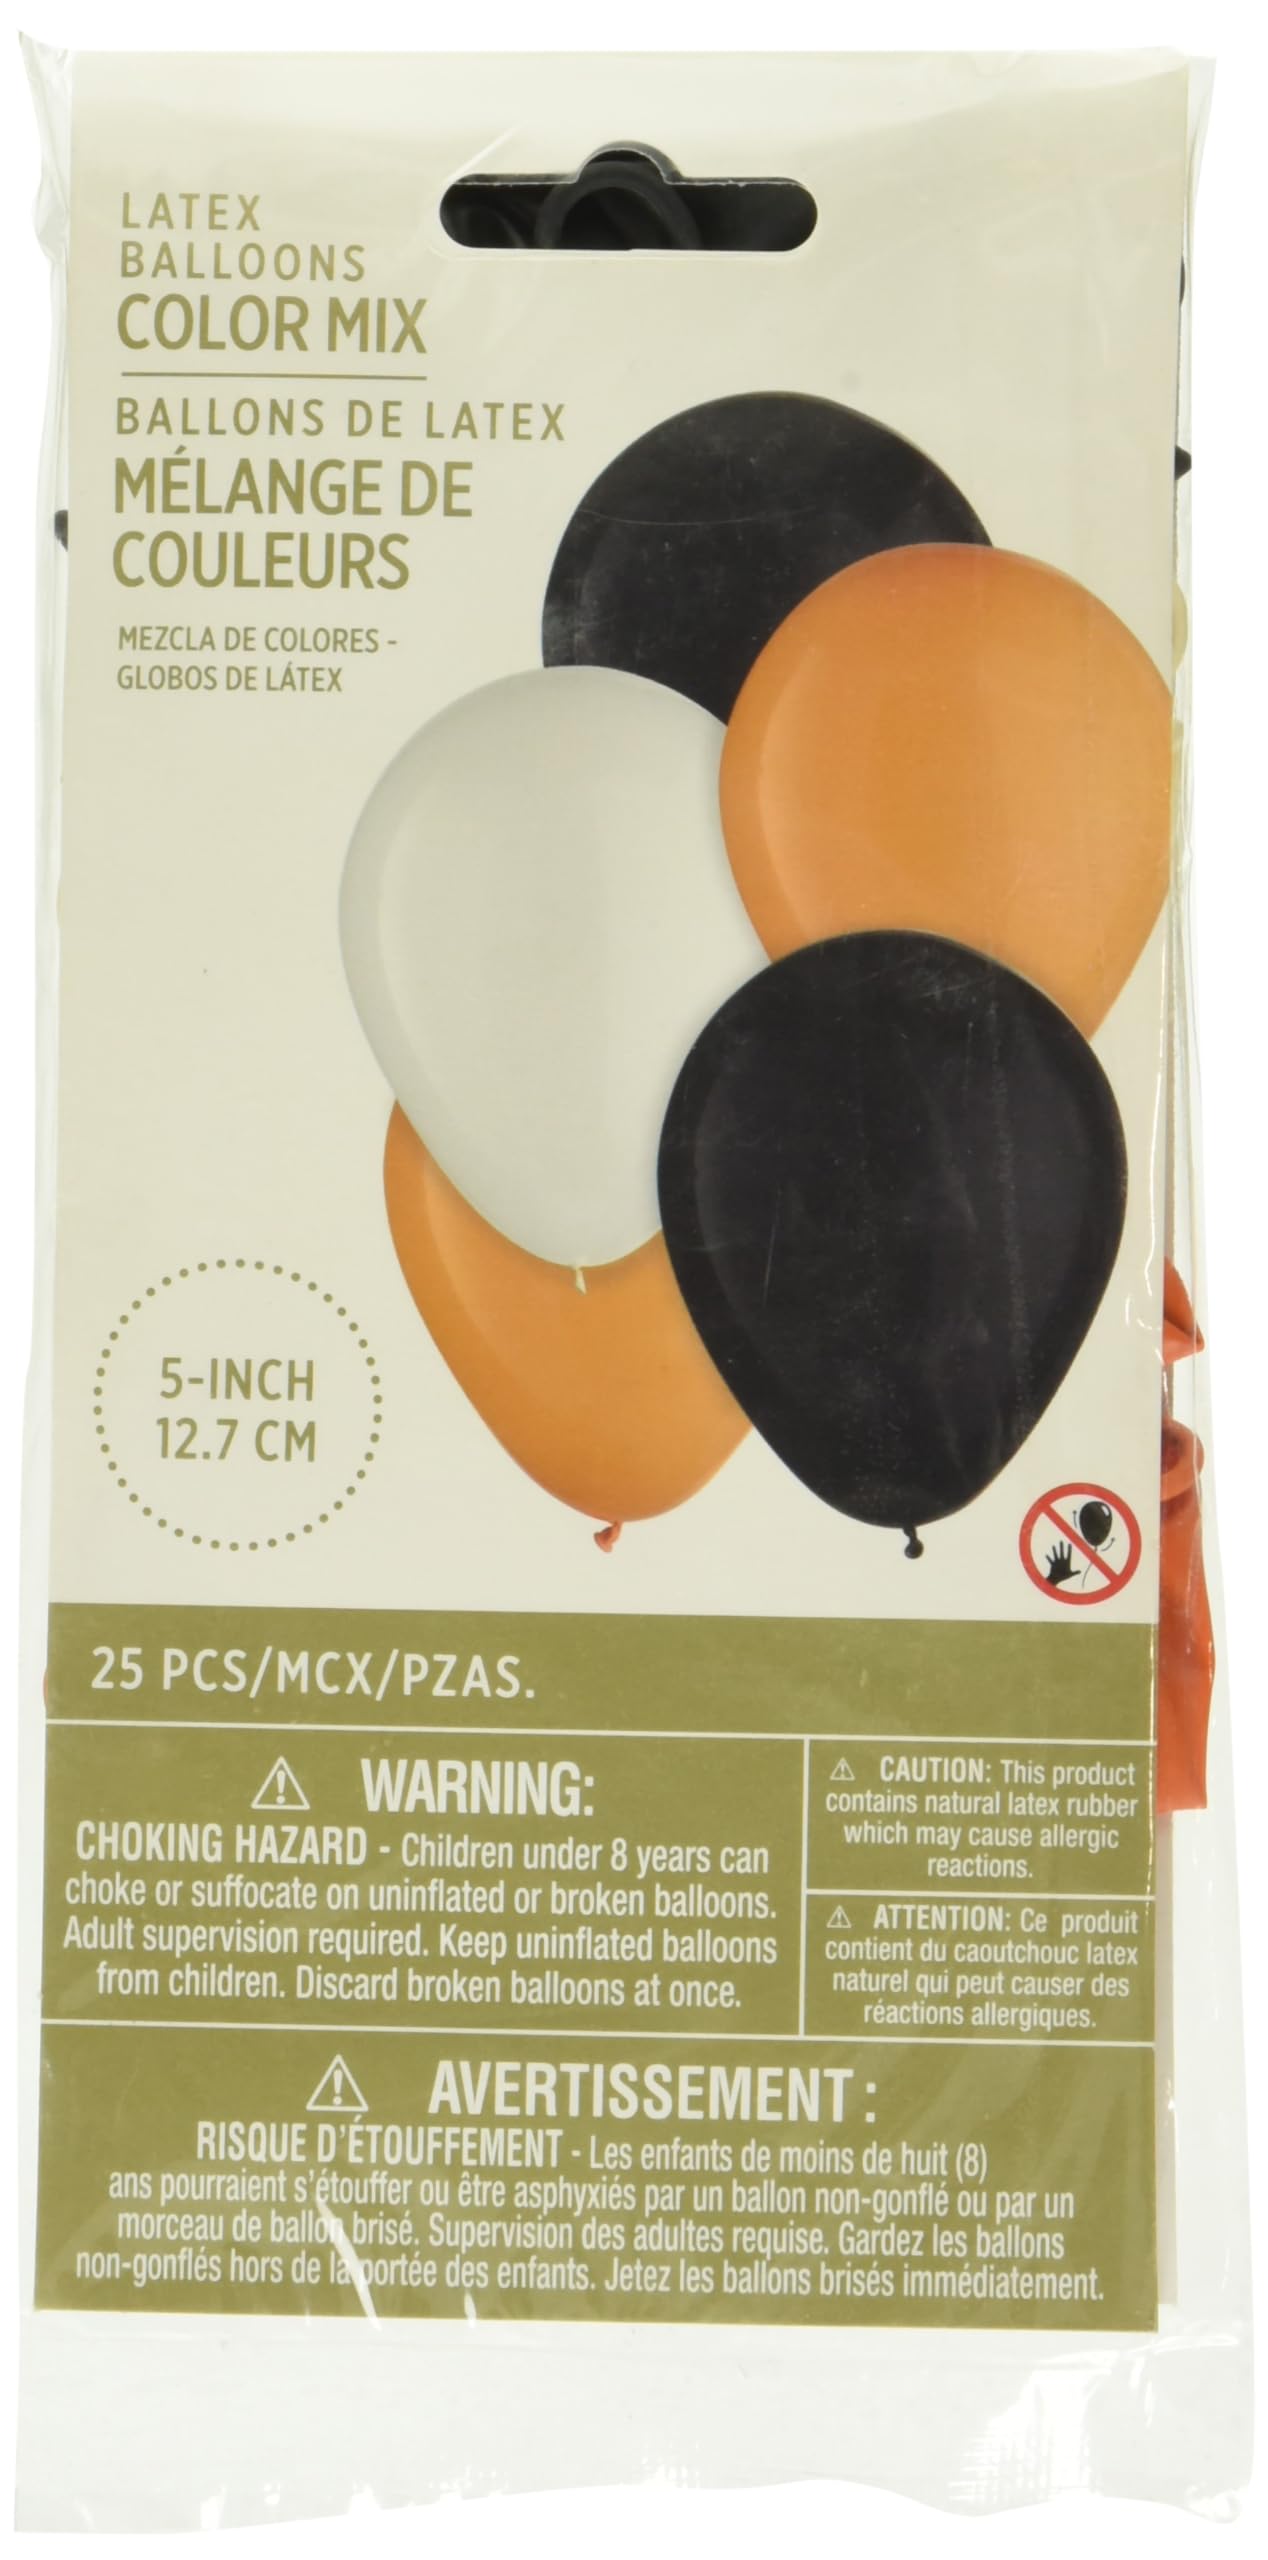 Vibrant Black, White & Orange Latex Balloons - 5